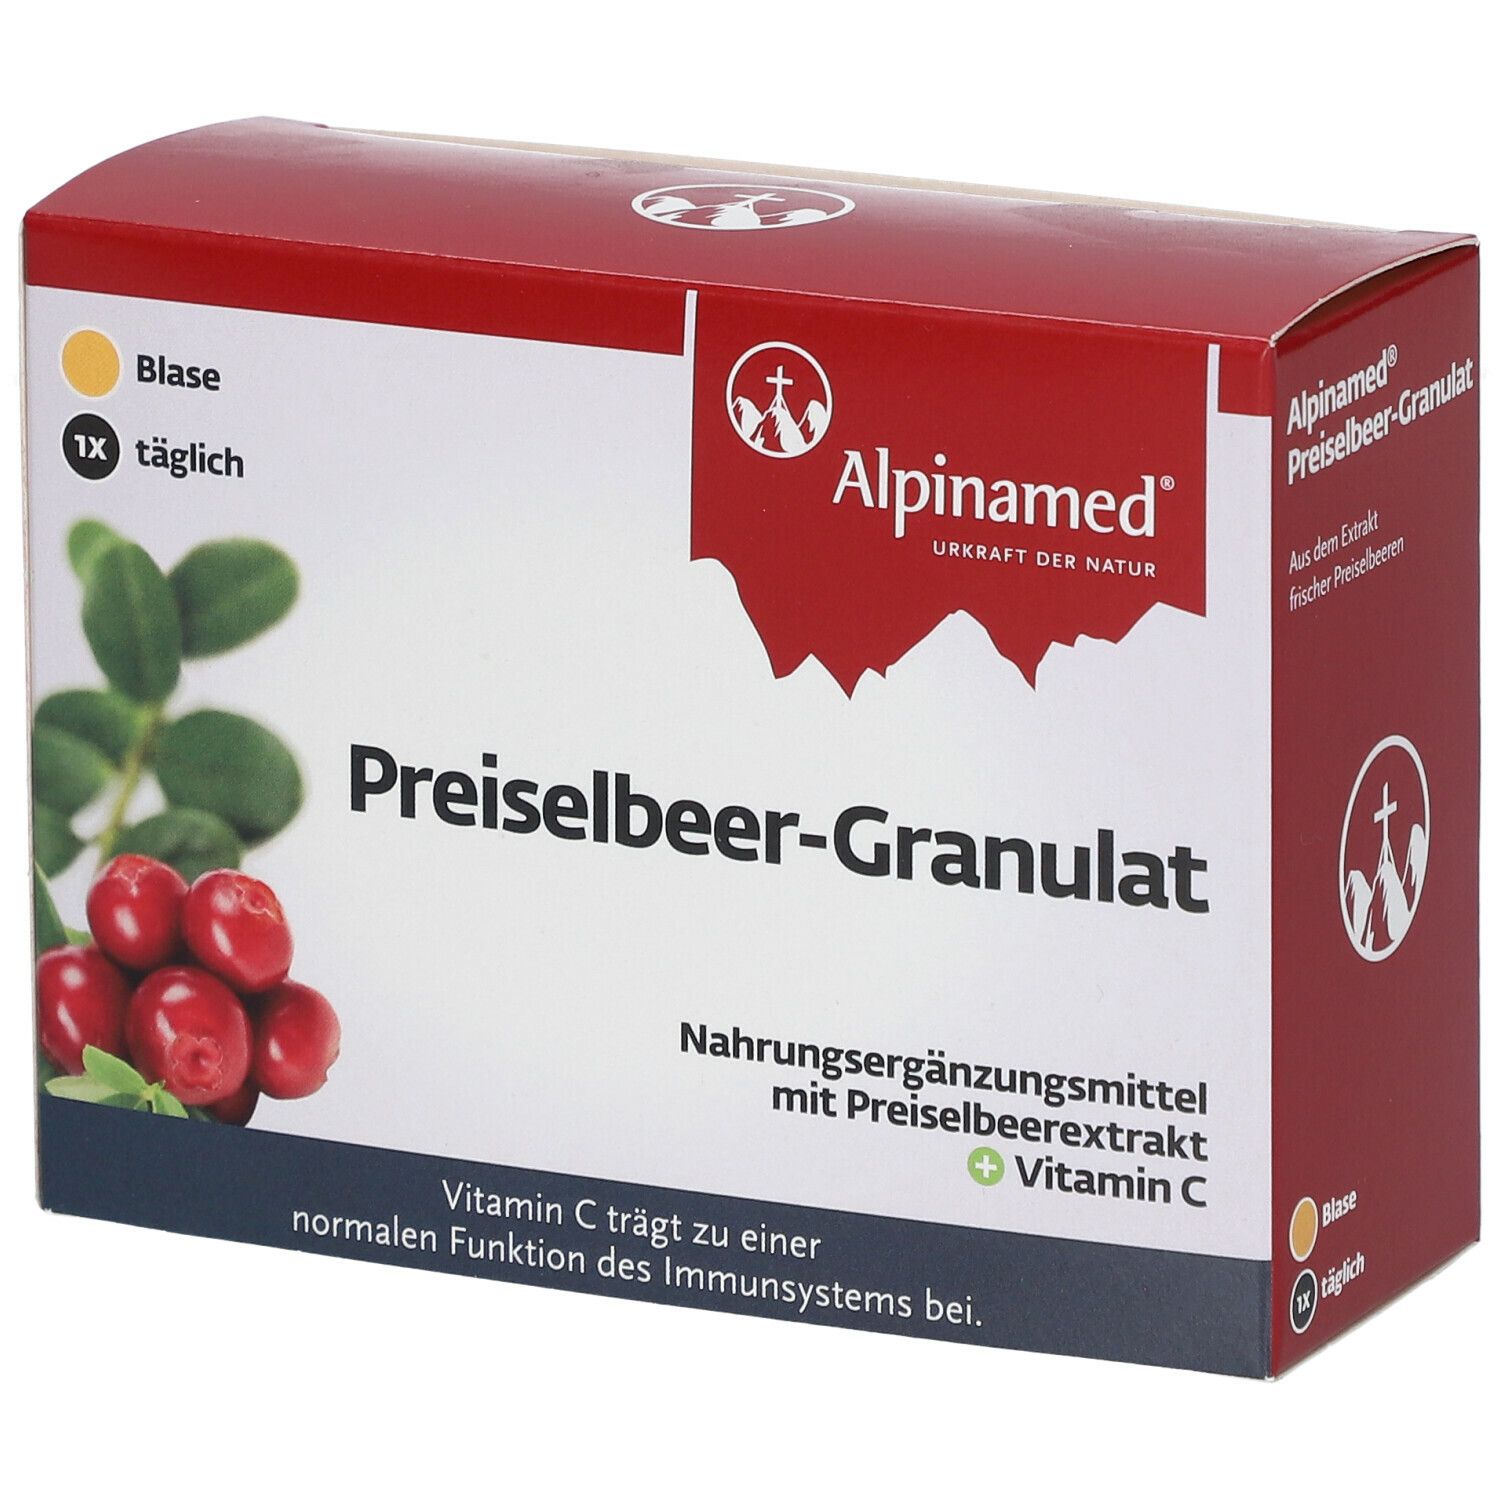 Alpinamed® Preiselbeer-Granulat